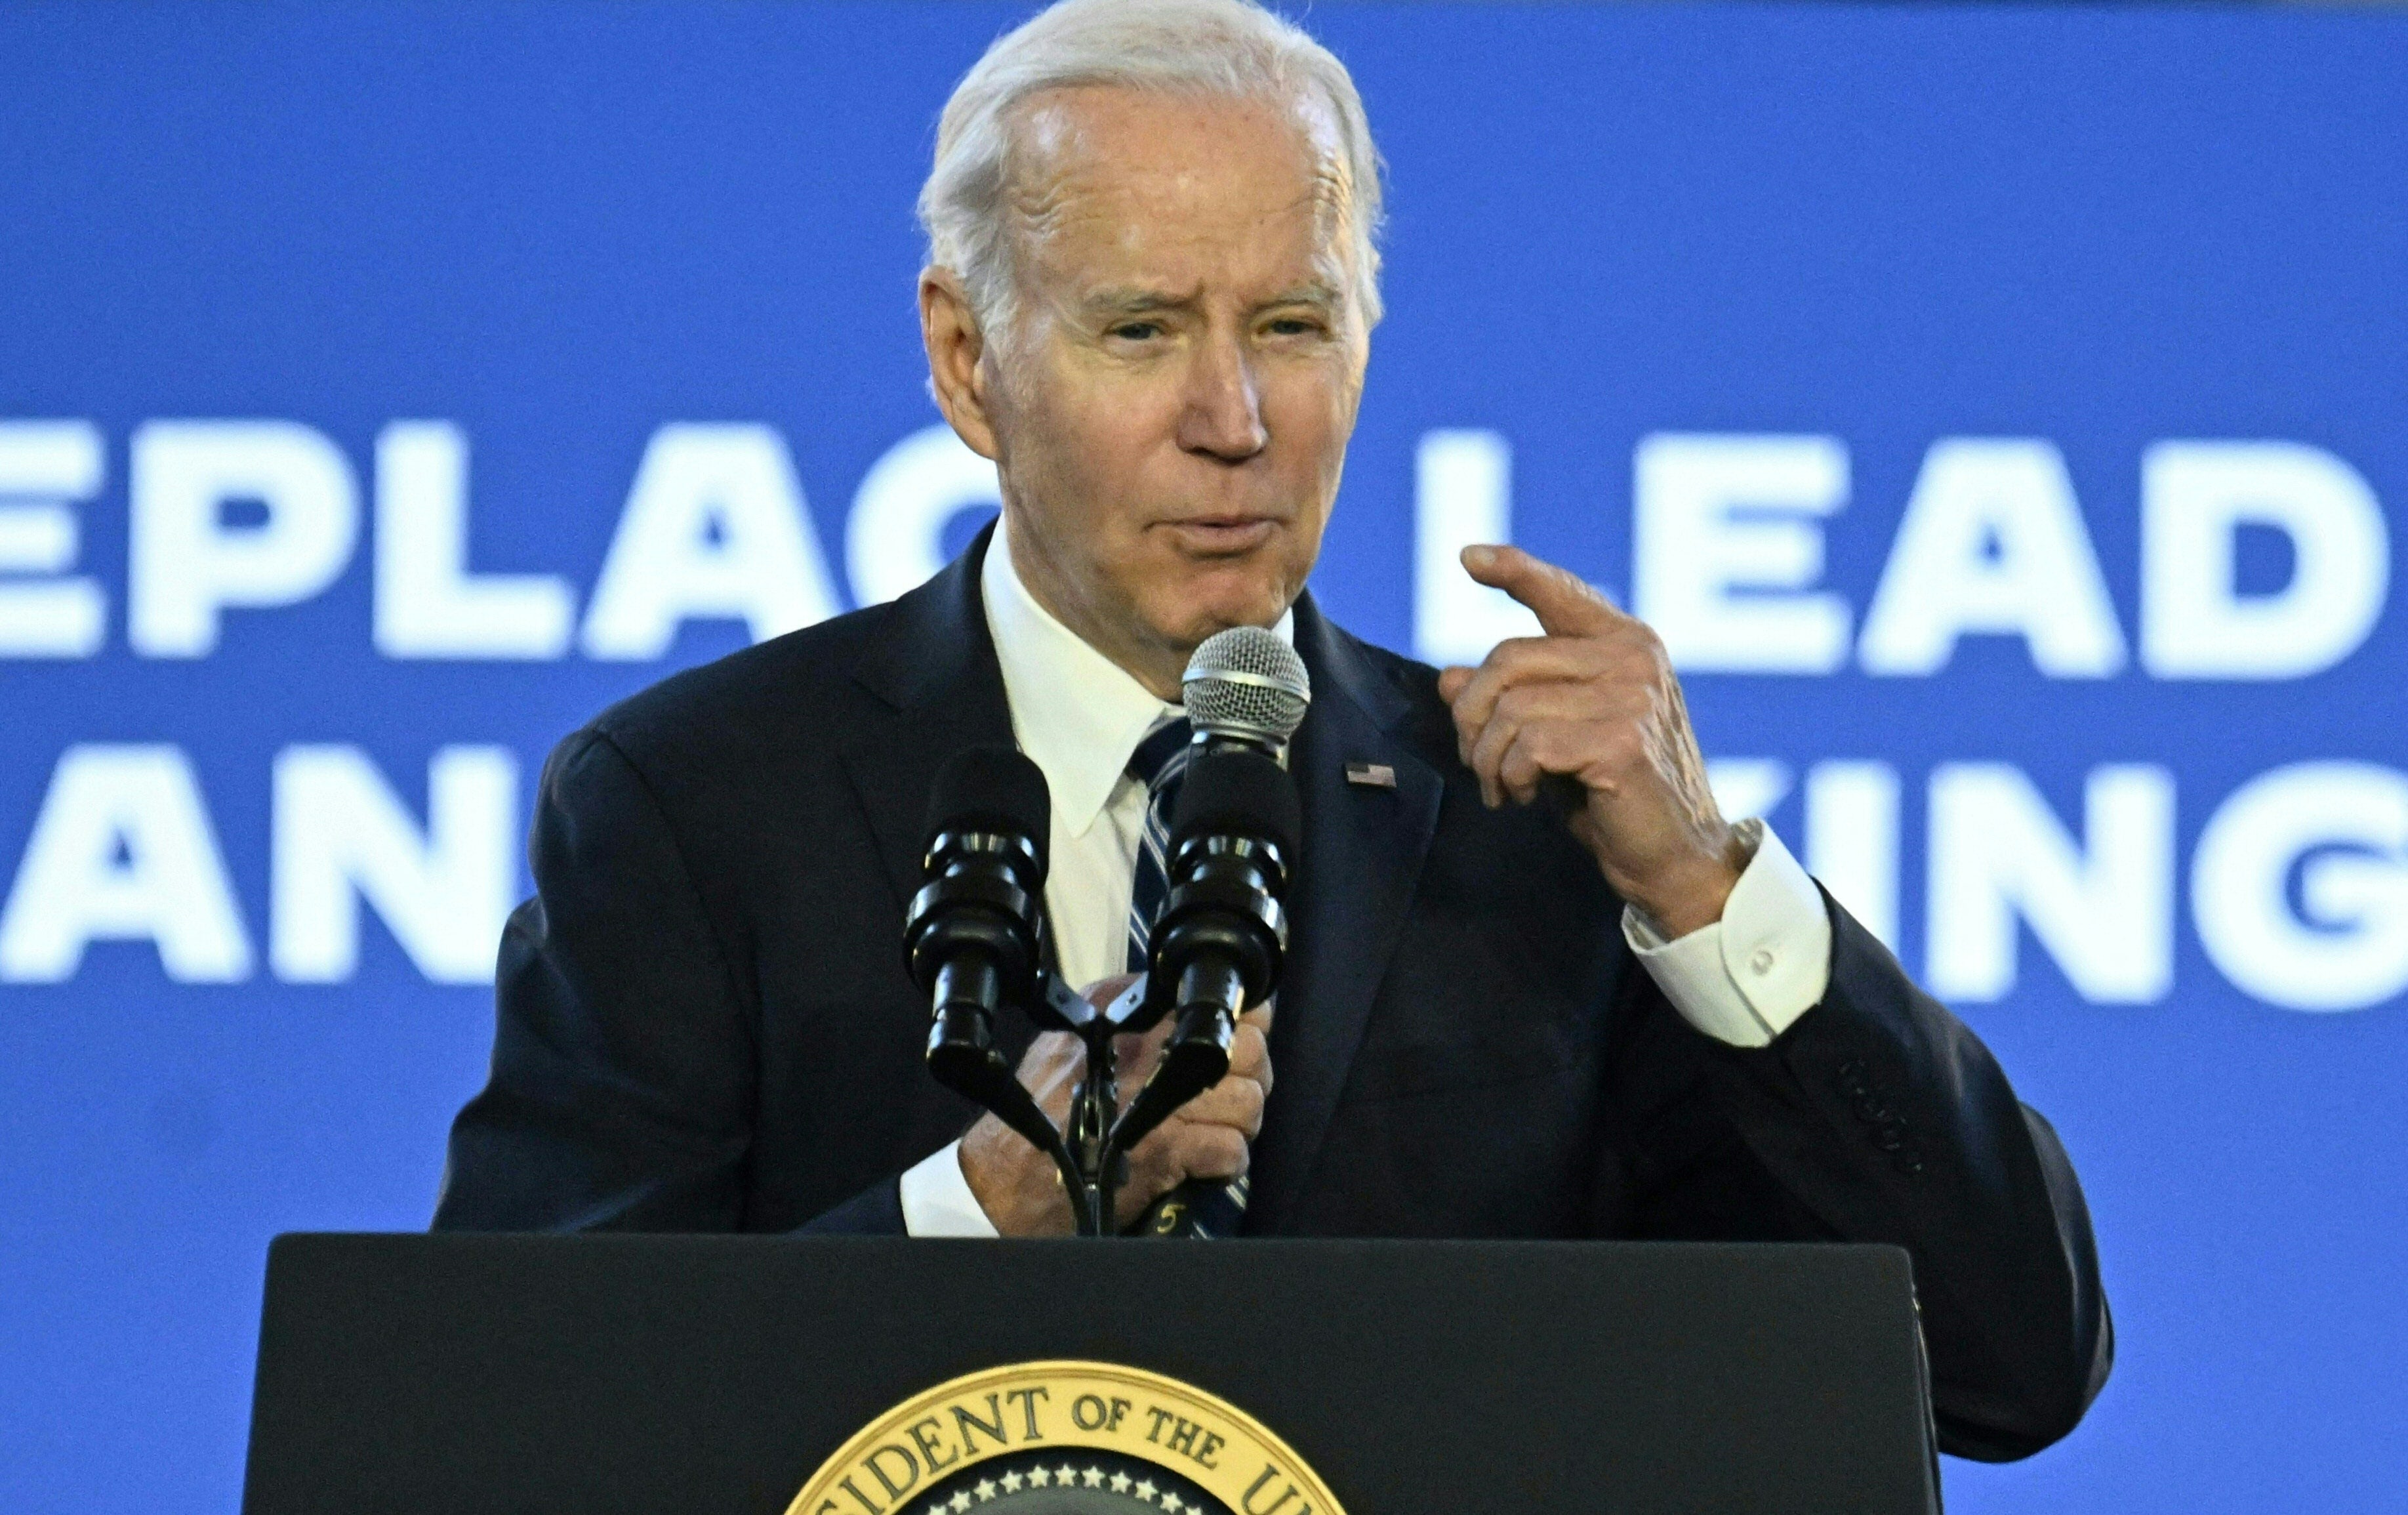 Biden stumbles over word in Philadelphia speech: ‘Recalibration’